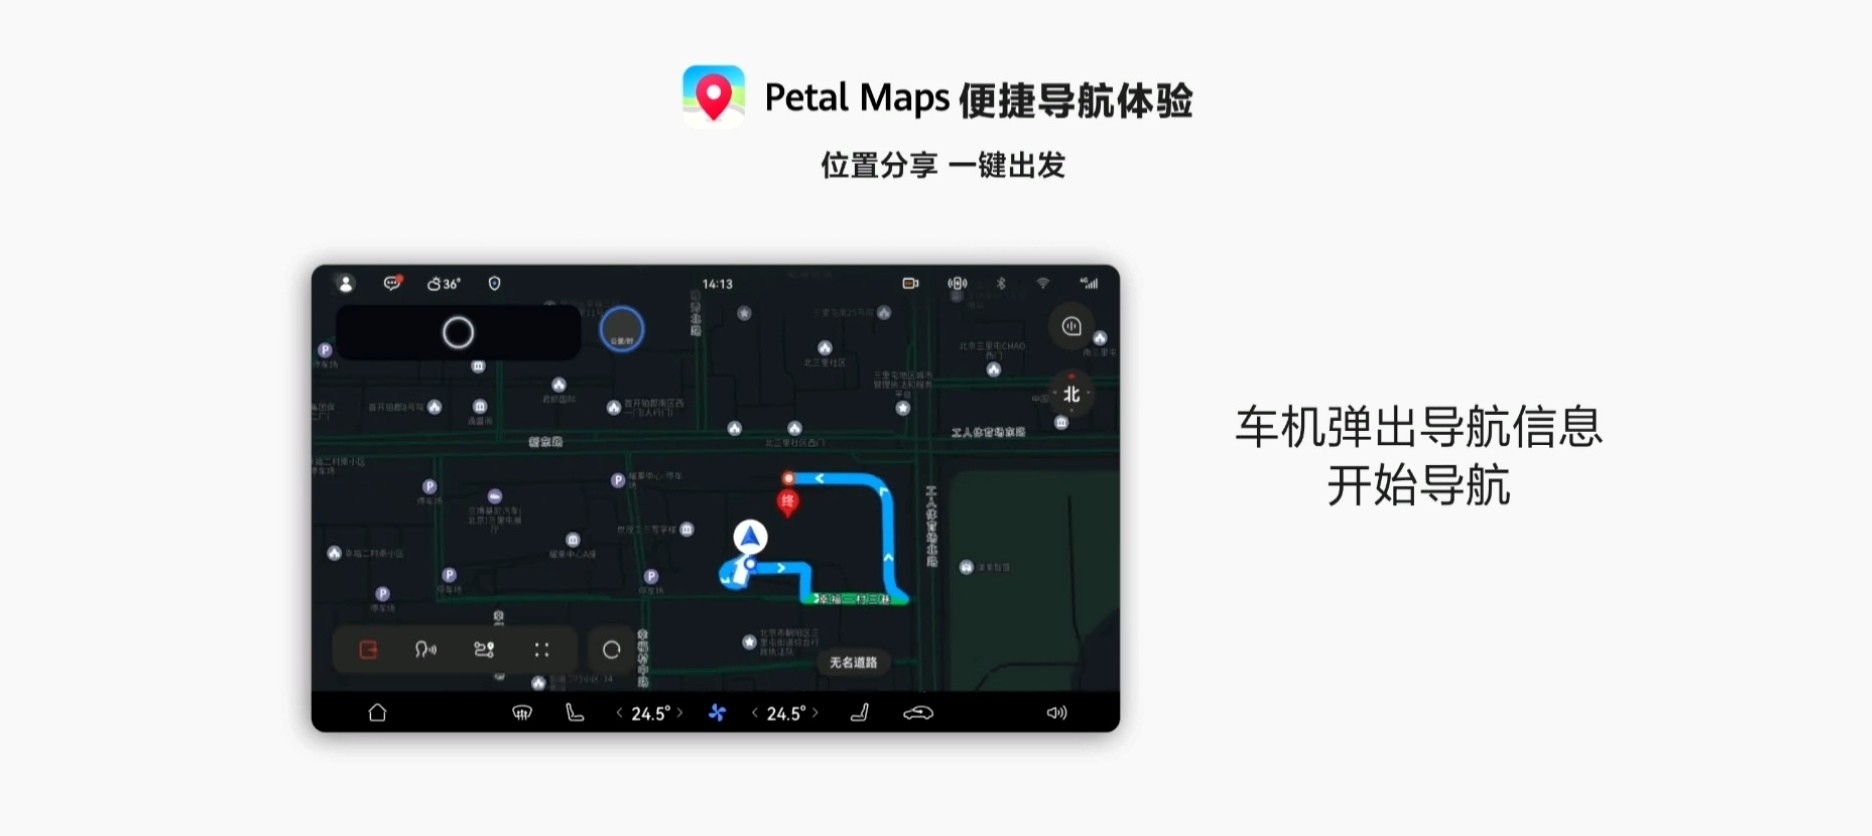 Petal Maps智能车载地图解决方案上线阿维塔11鸿蒙版，携手打造智慧导航新体验图2